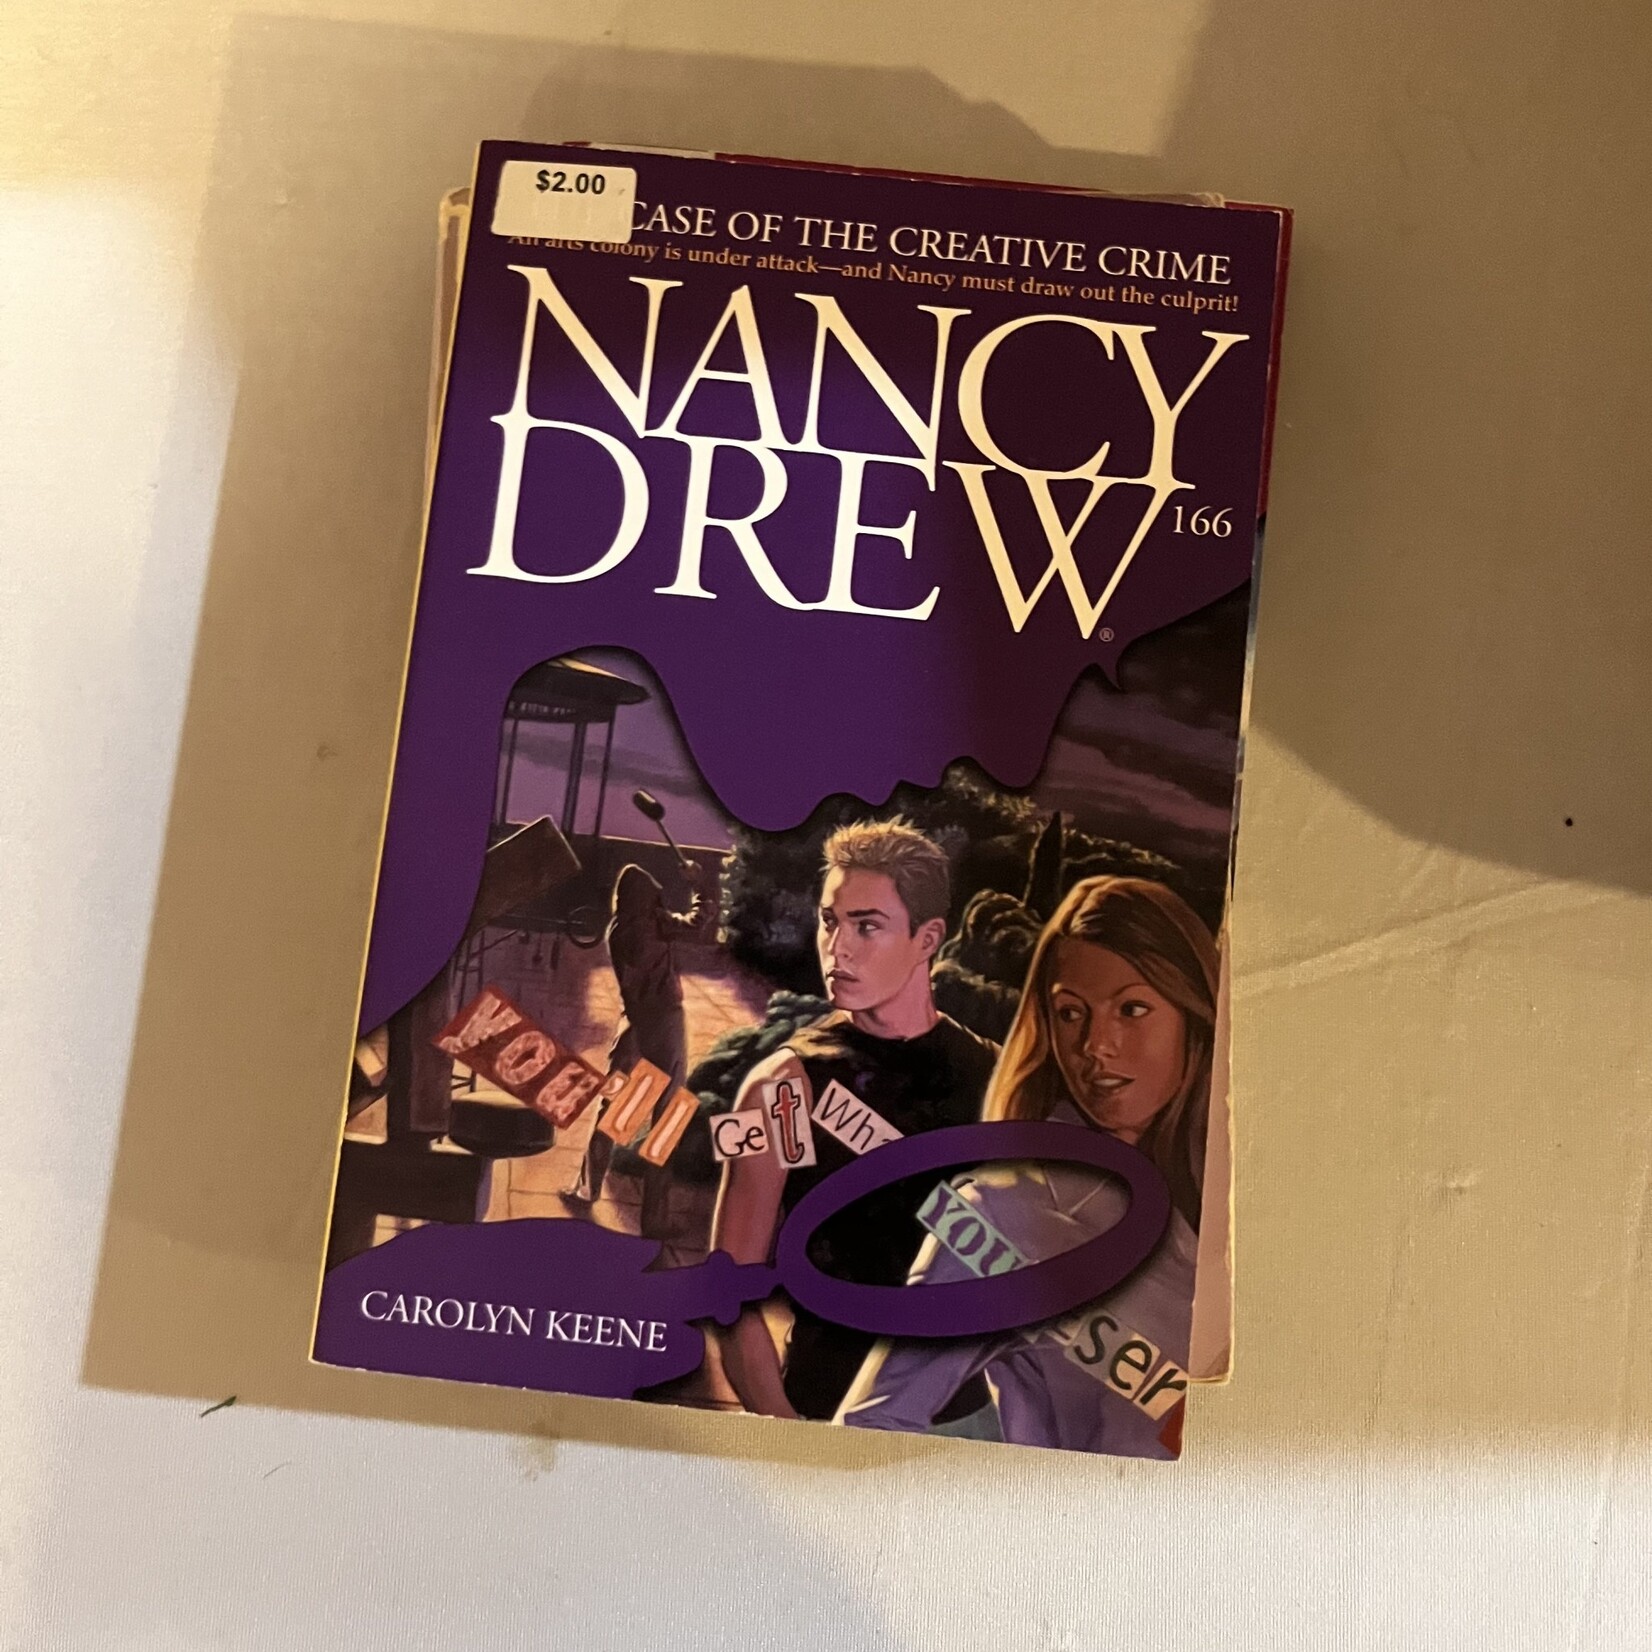 Nancy Drew - The Case of the Creative Crime #166